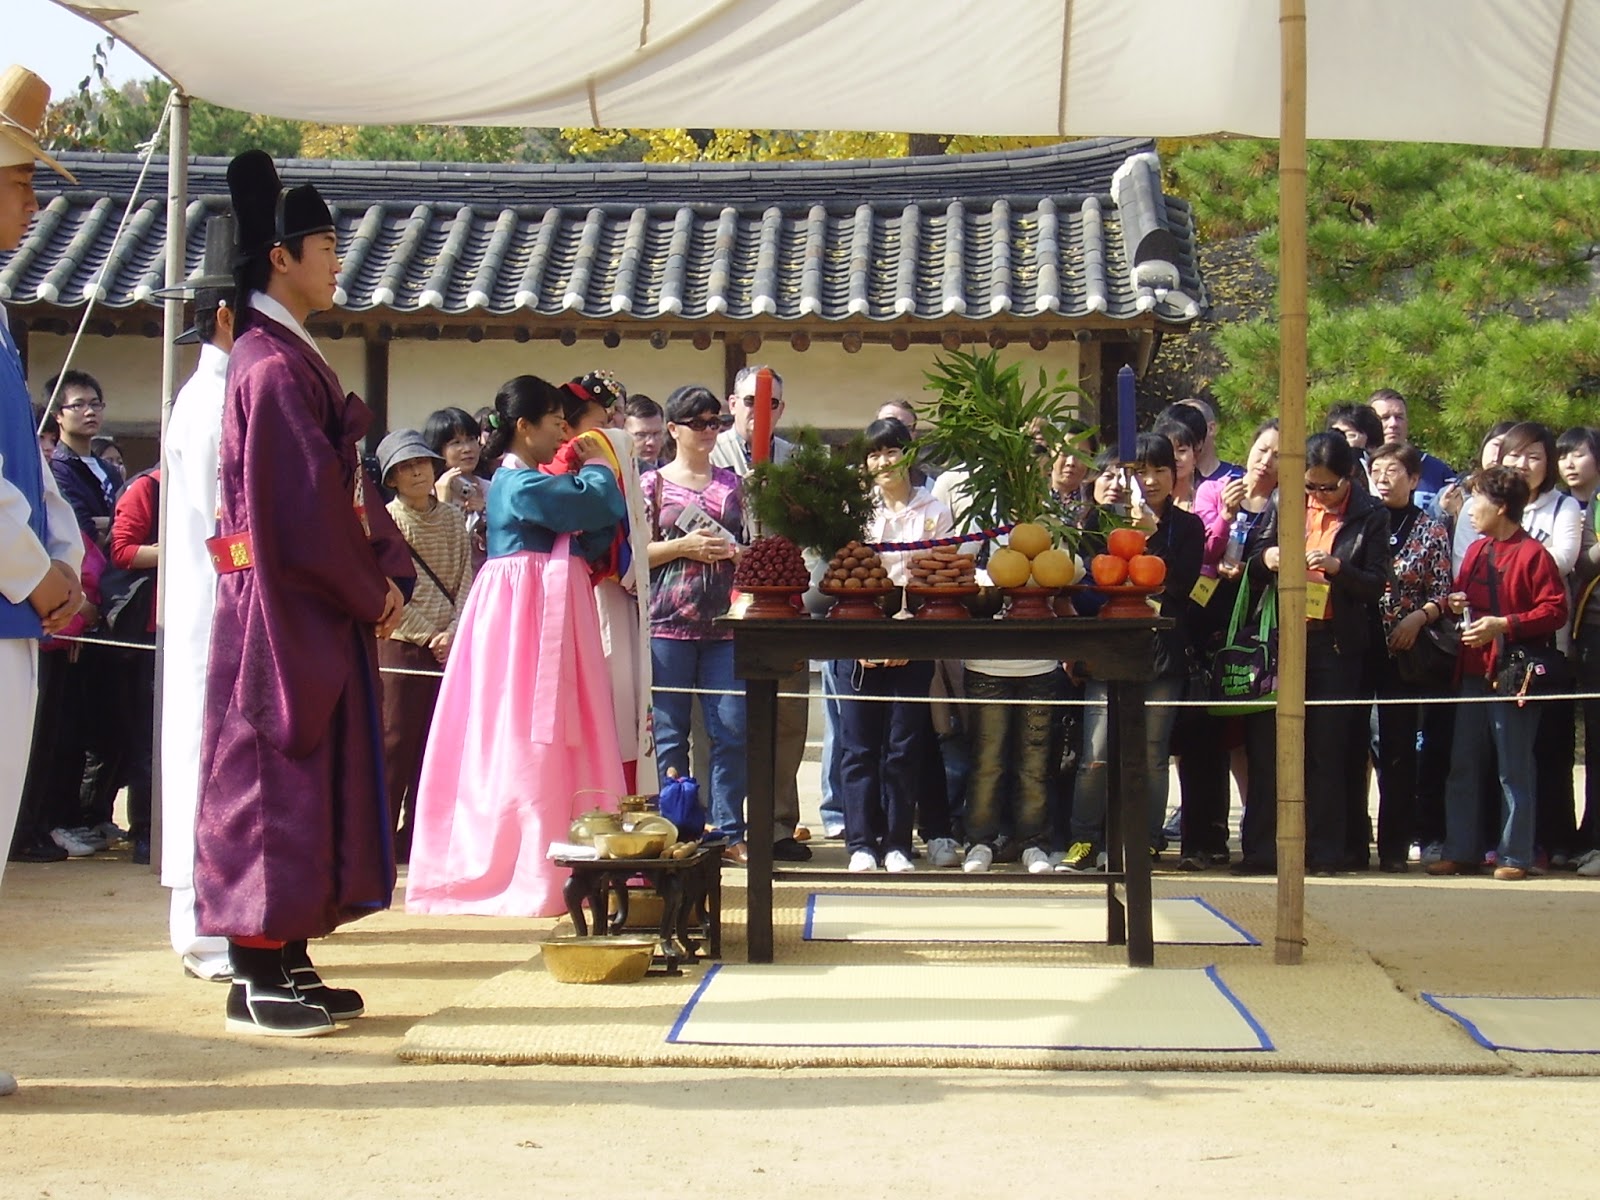 MY MURNI: Traditional wedding Korean